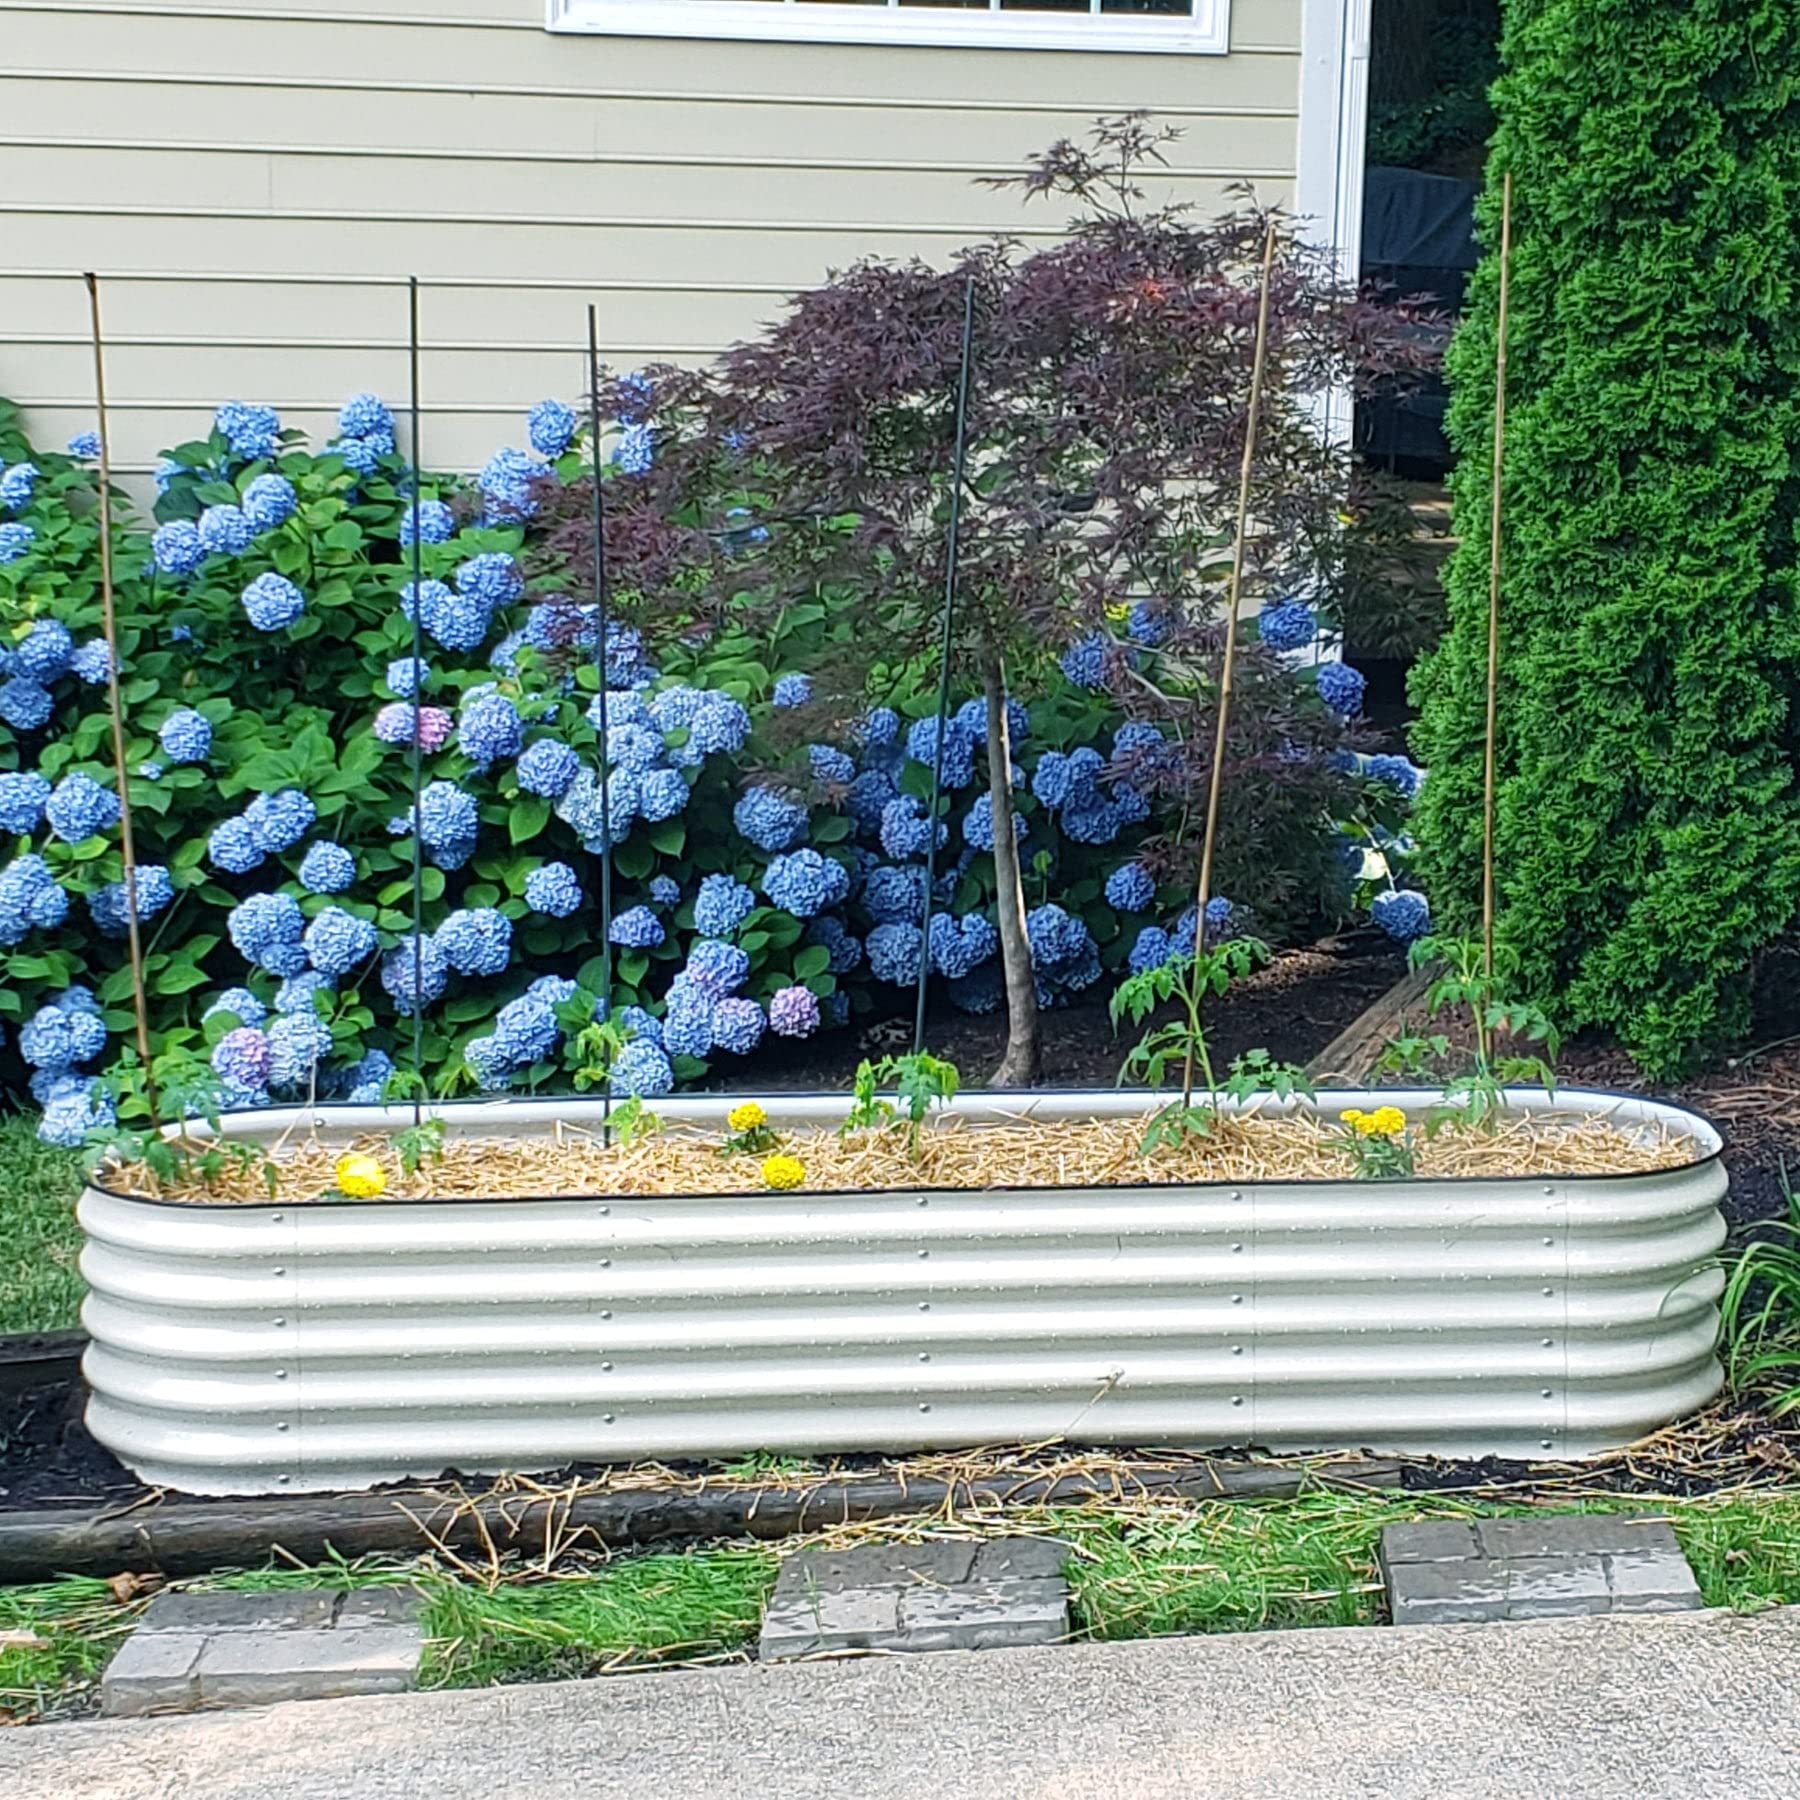 Vego garden Raised Garden Bed Kits, 17" Tall 9 in 1 8ft X 2ft Metal Raised Planter Bed for Vegetables Flowers Ground Planter Box-Pearl White